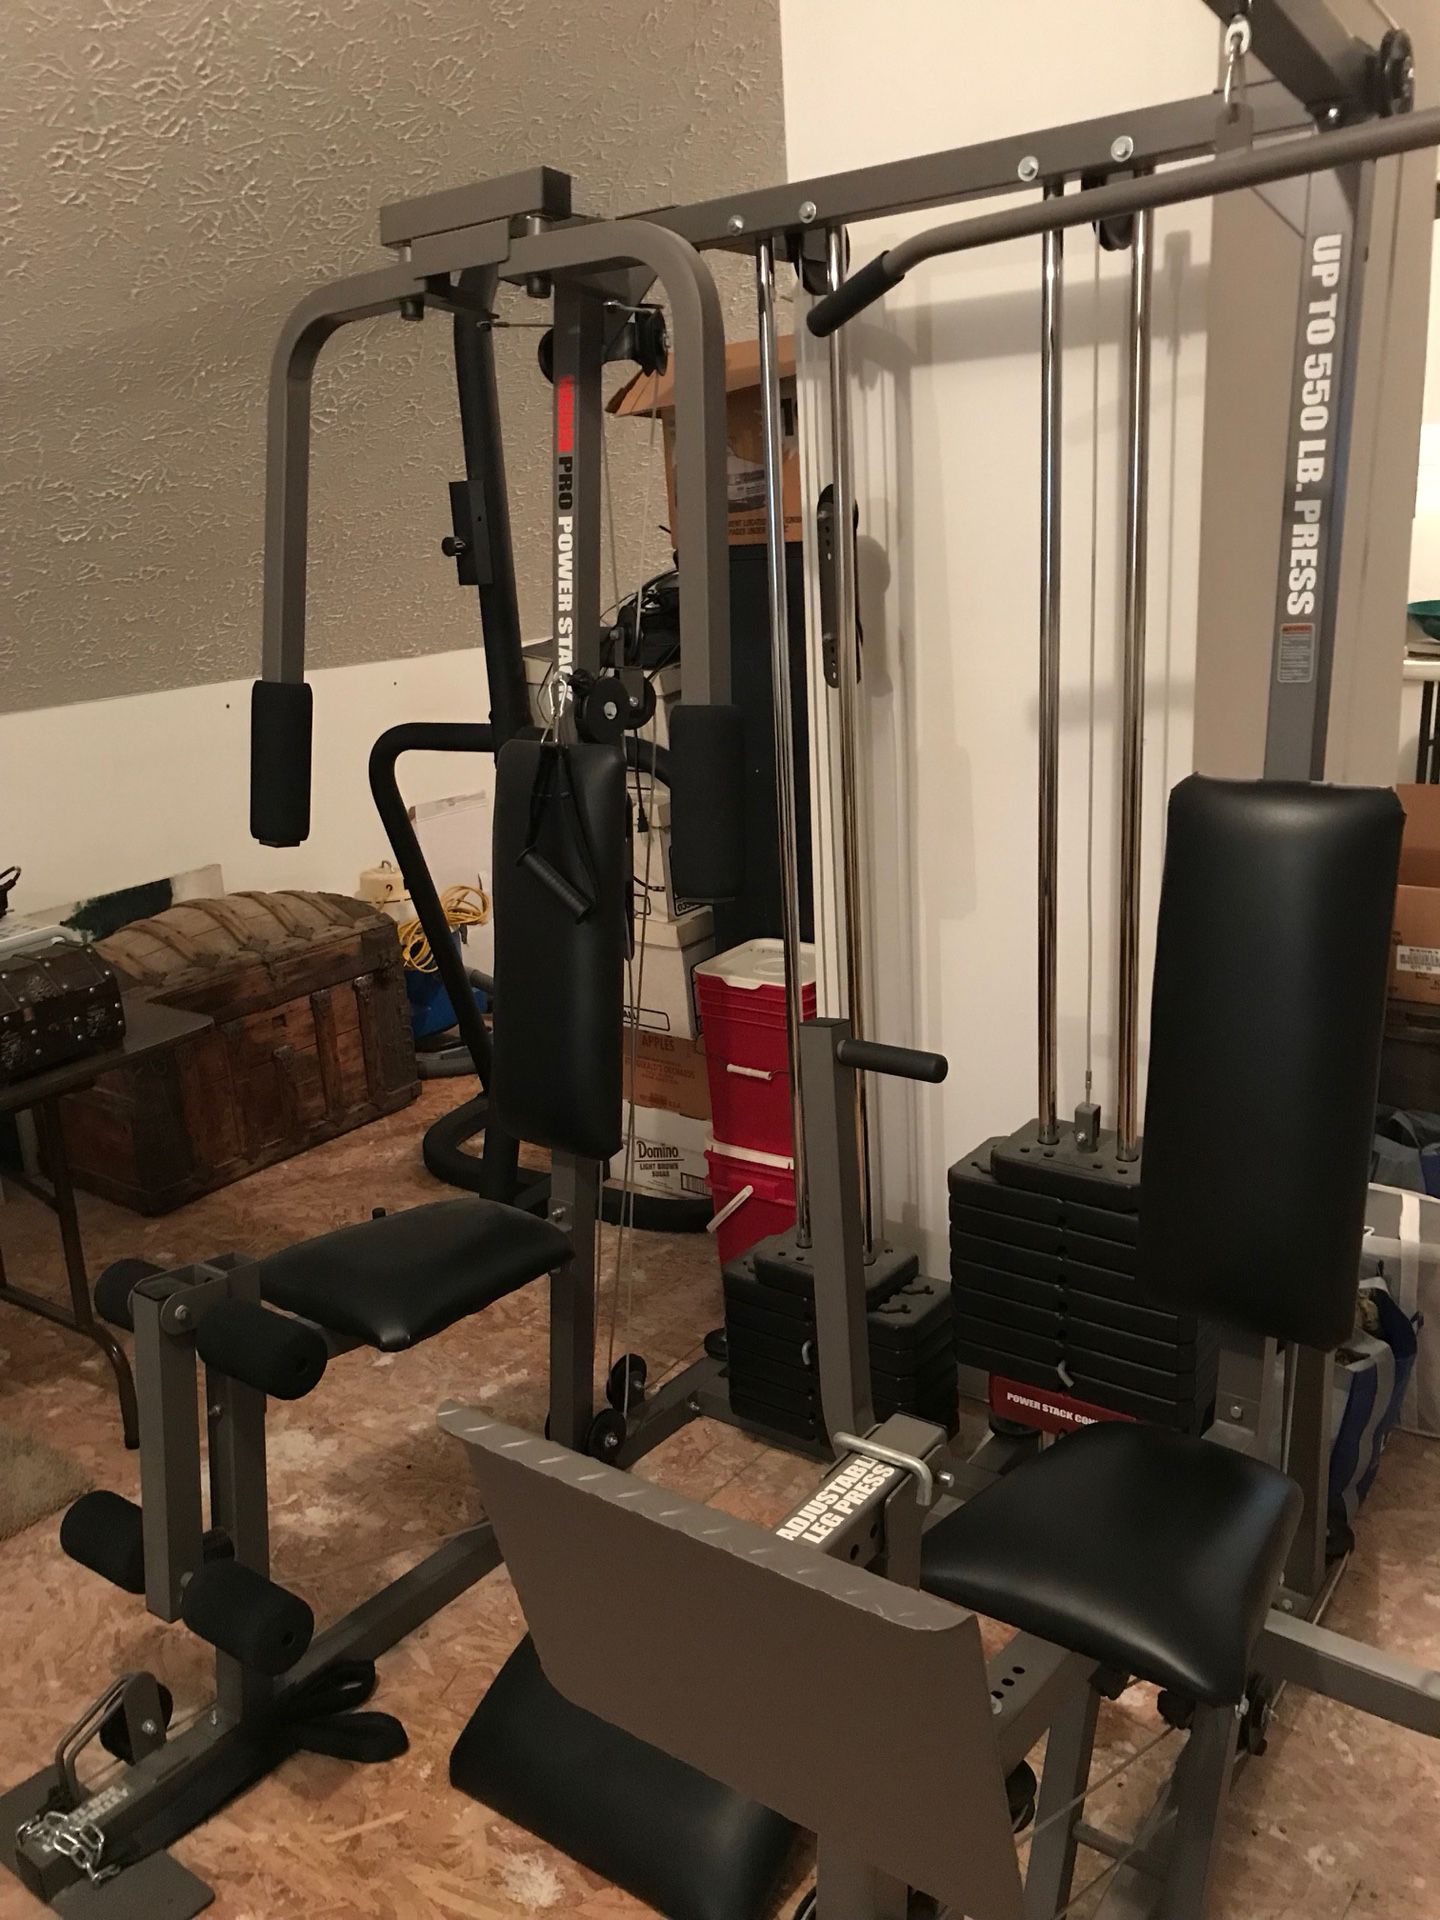 Multi station exercise gym